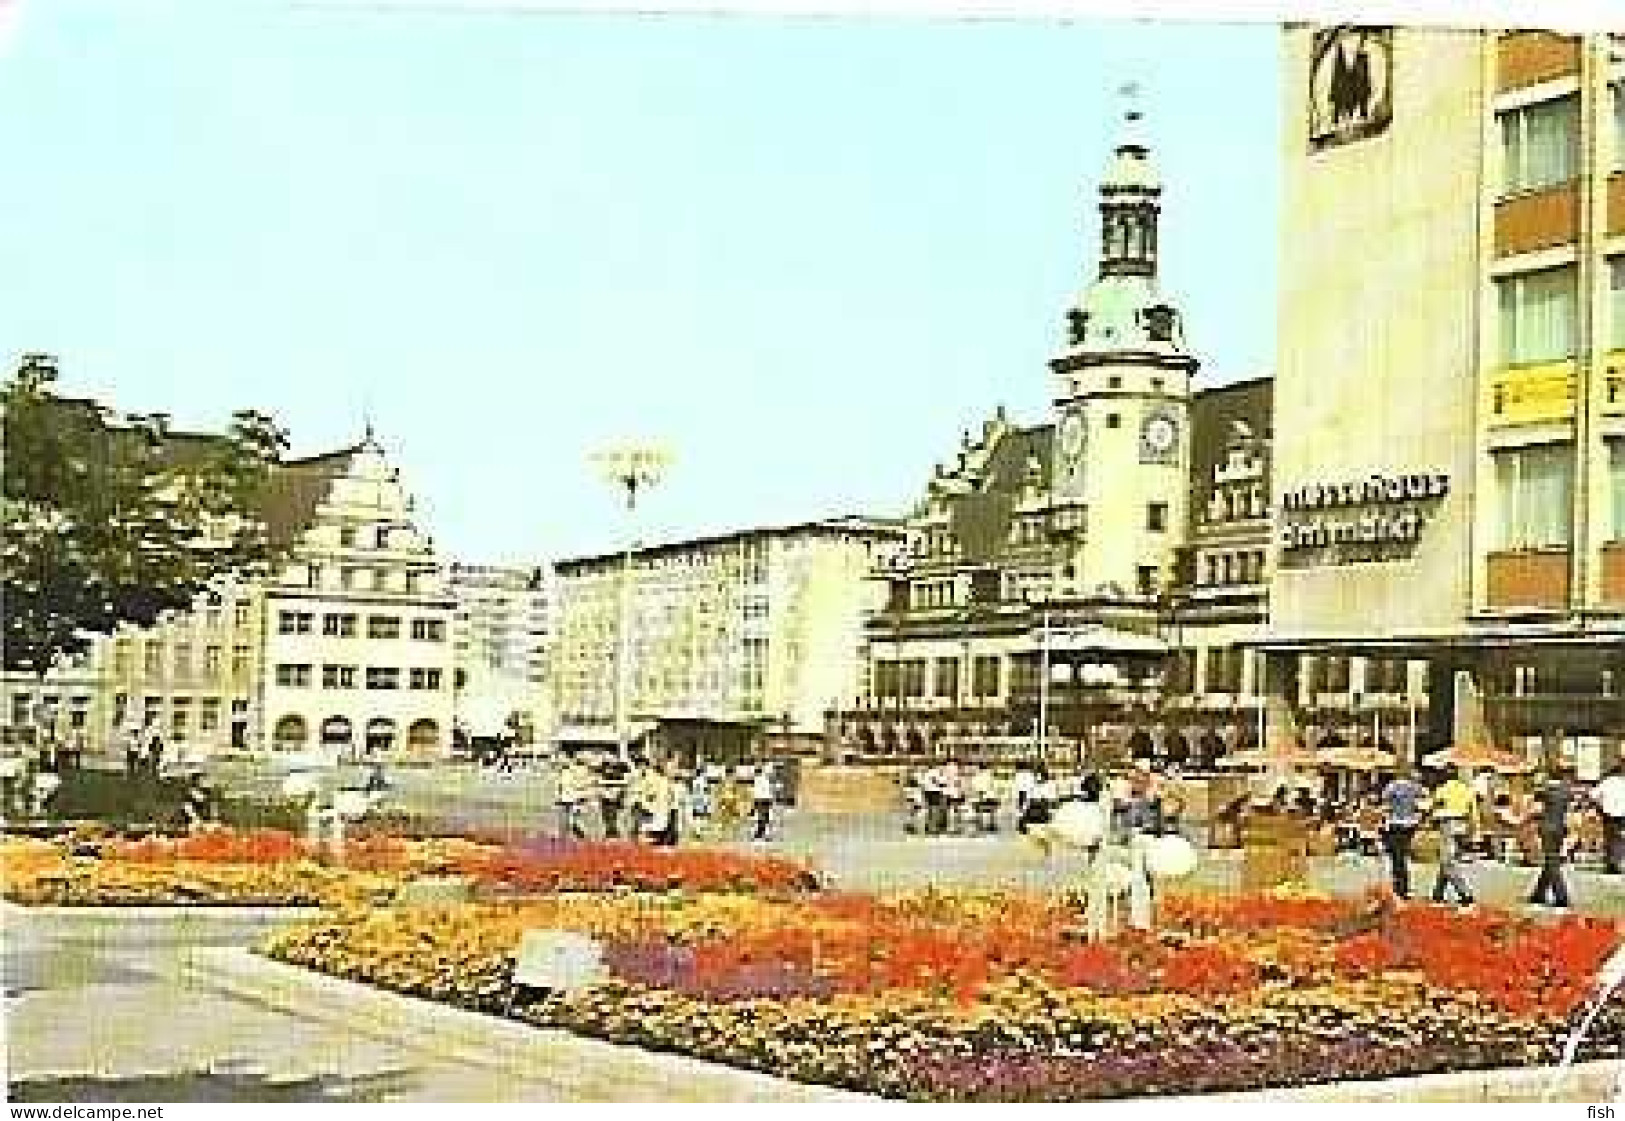 Germany  & Messesstadt Leipzig , Altes Rathaus Am Markt, Karl Marx Stad DDR To  Oeiras Portugal 1983 (7776) - Markets